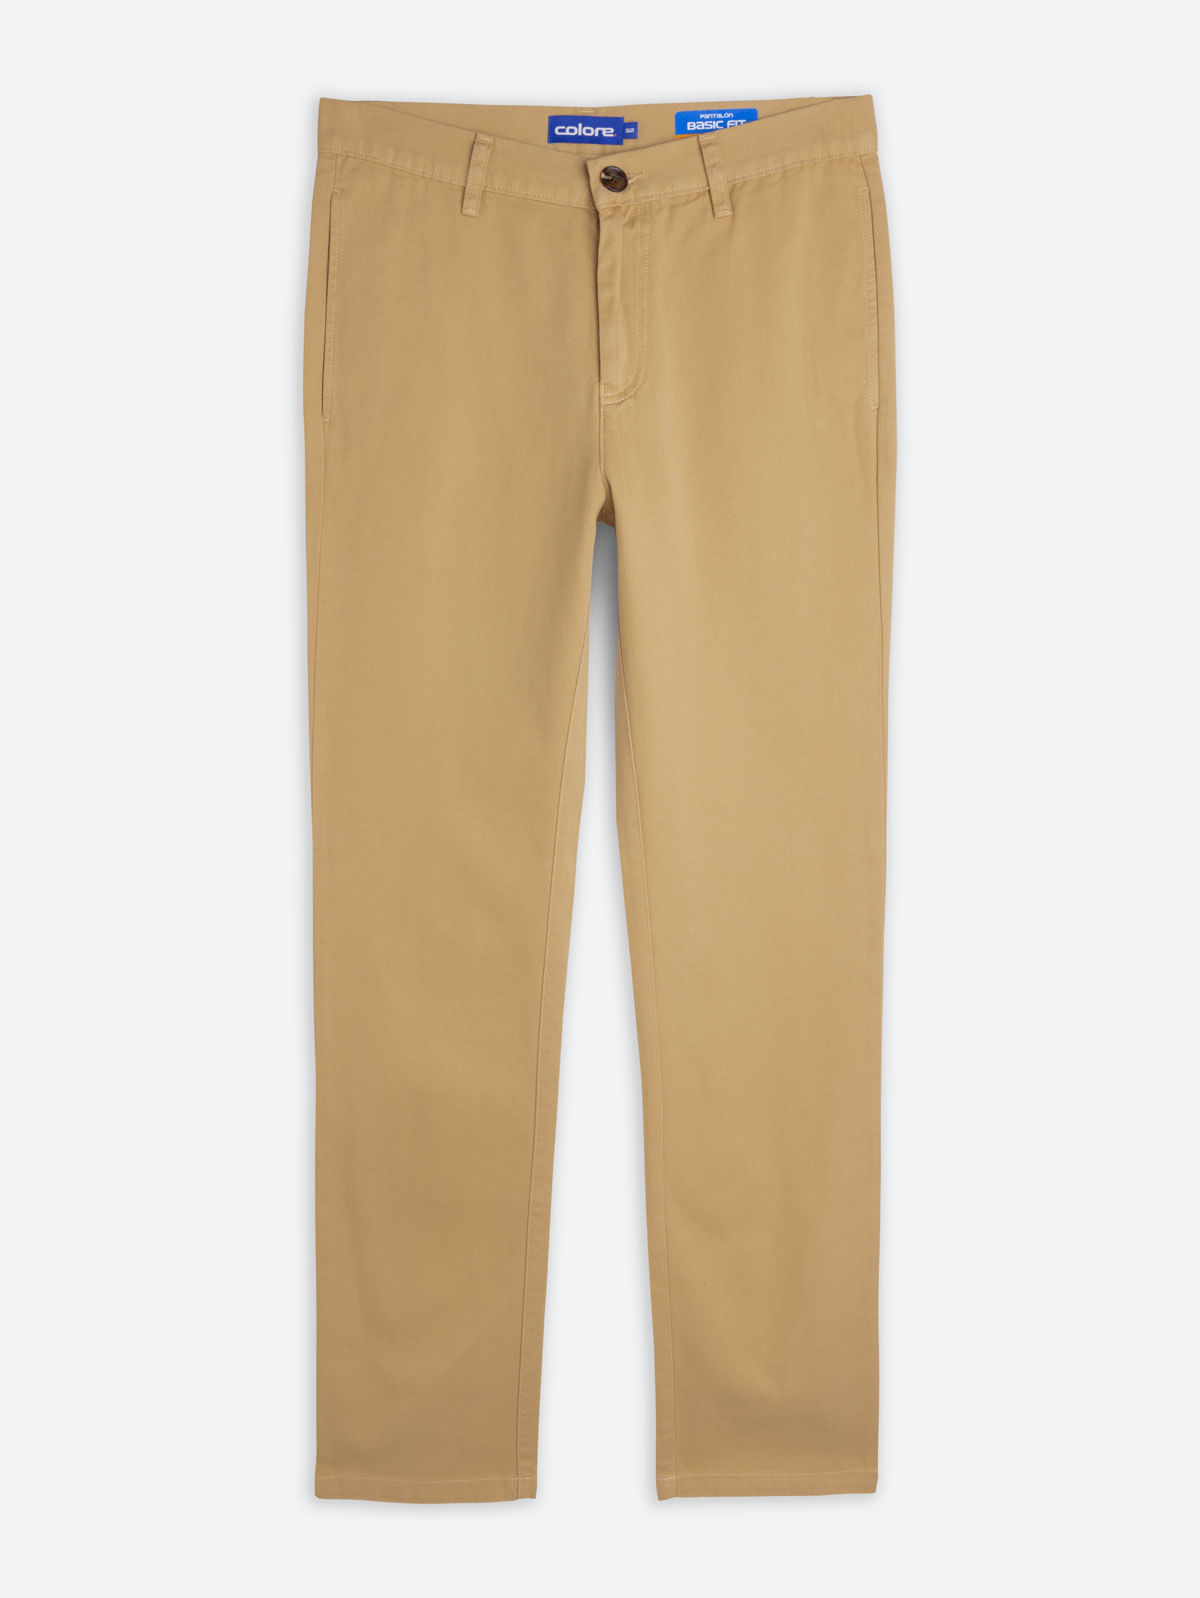 Pantalon 100% Poliester Hombre Color ○ 15.58€